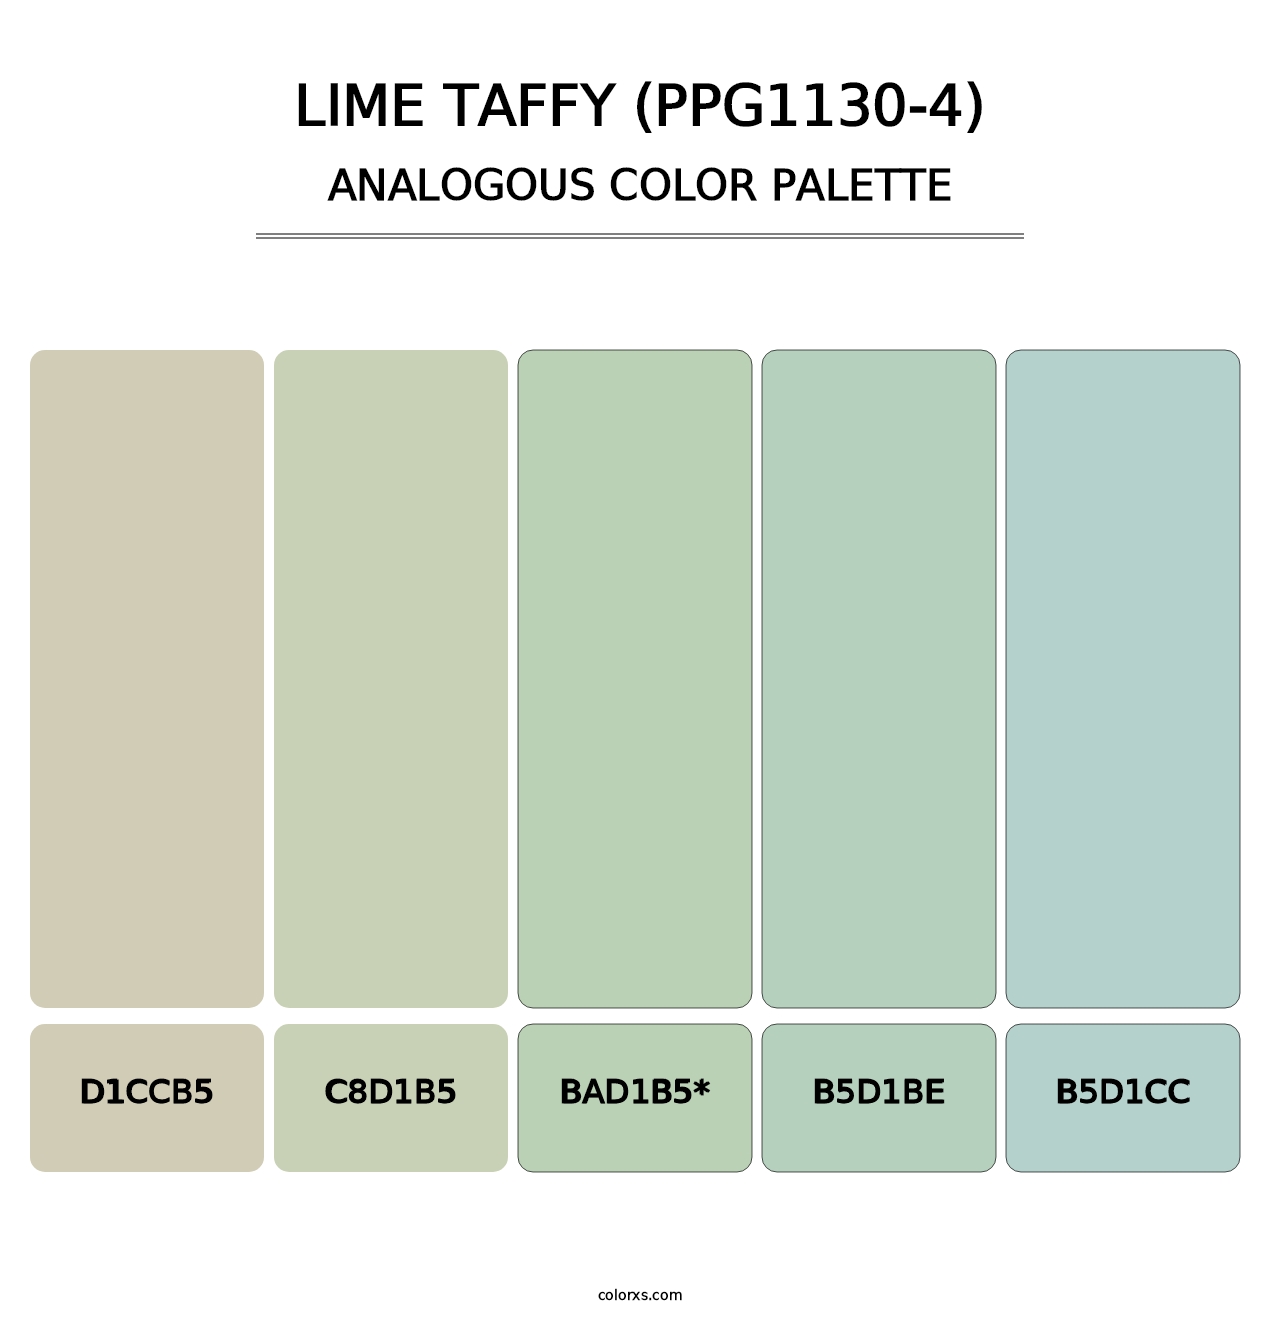 Lime Taffy (PPG1130-4) - Analogous Color Palette